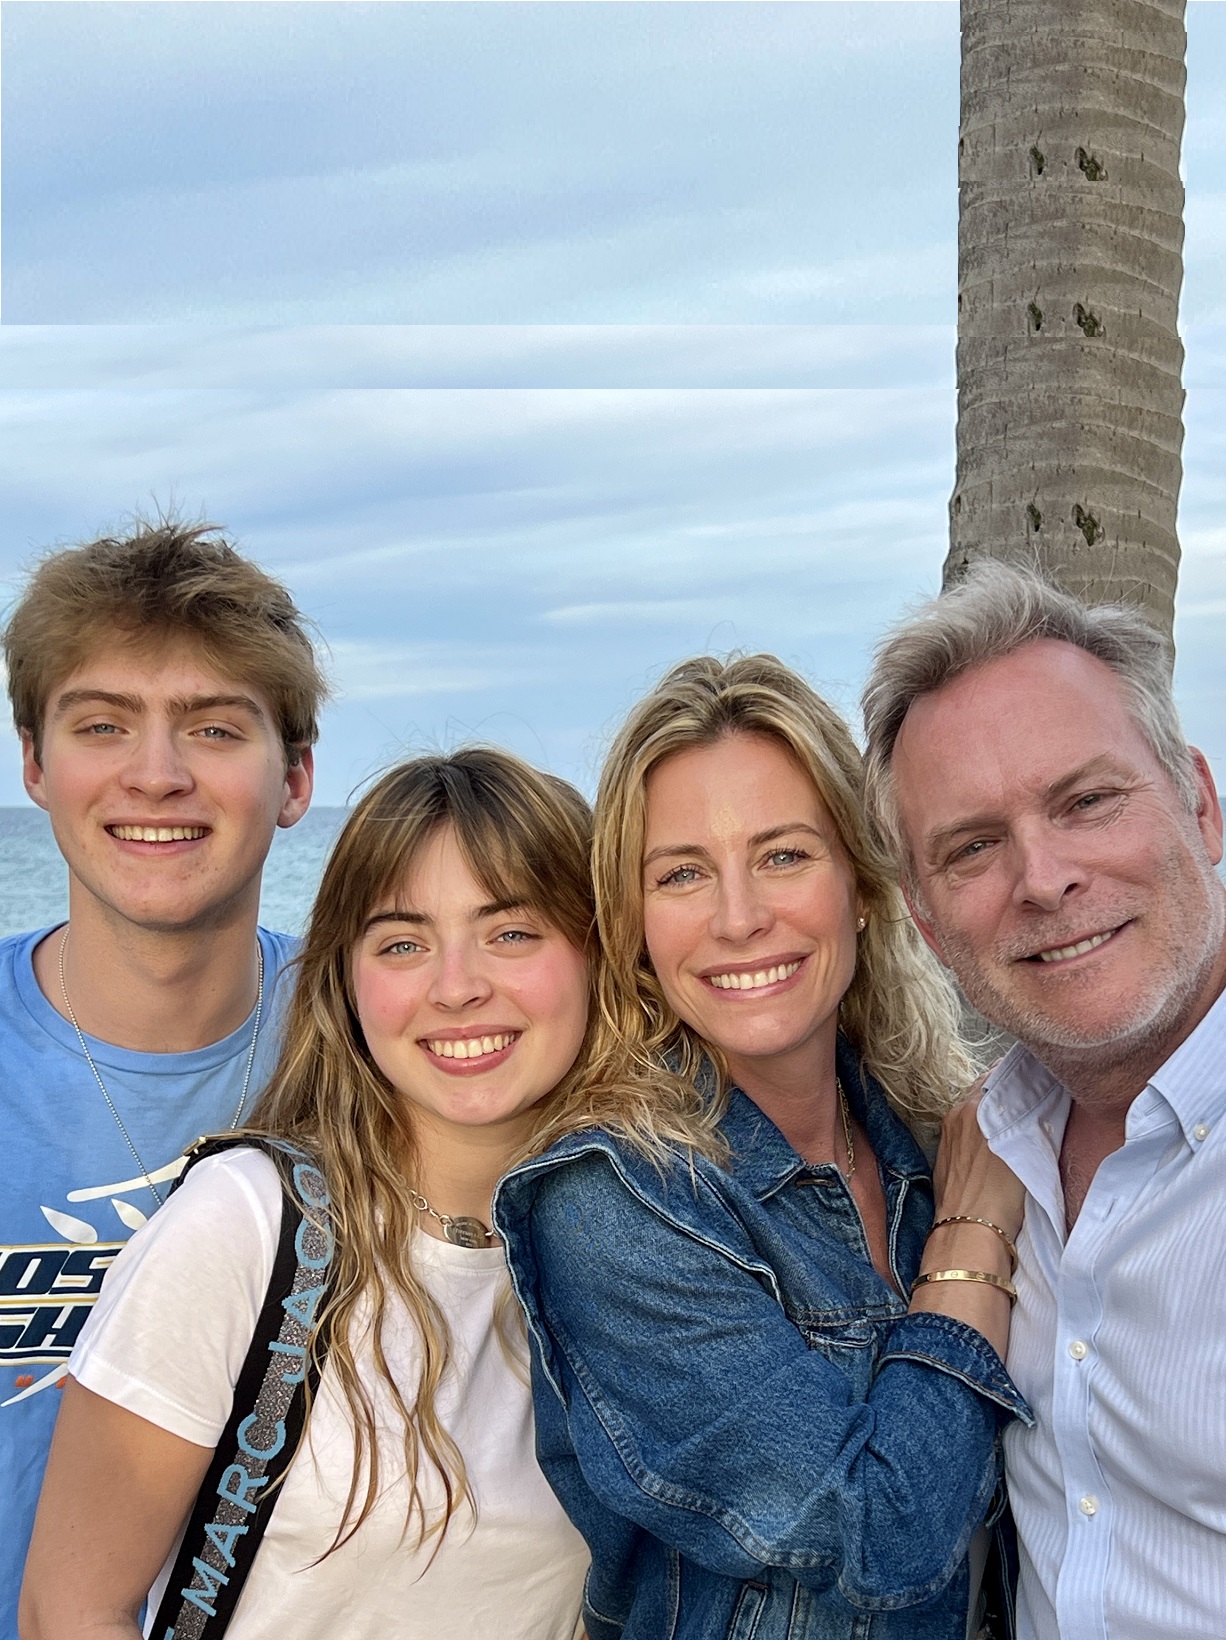 Heart & Stroke ambassador Julie du Page with her family